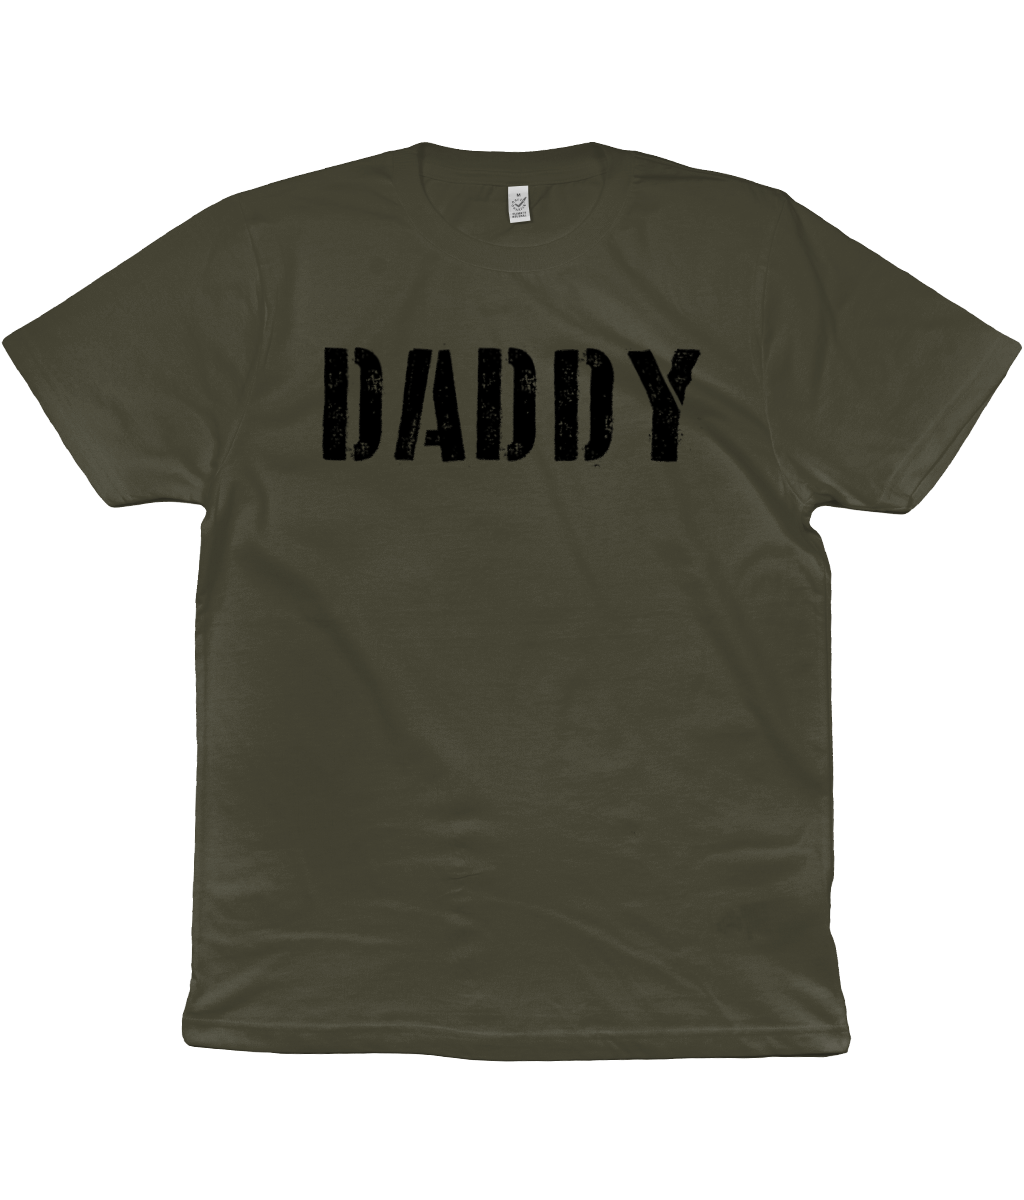 Army Green Daddy Organic Cotton T-Shirt 